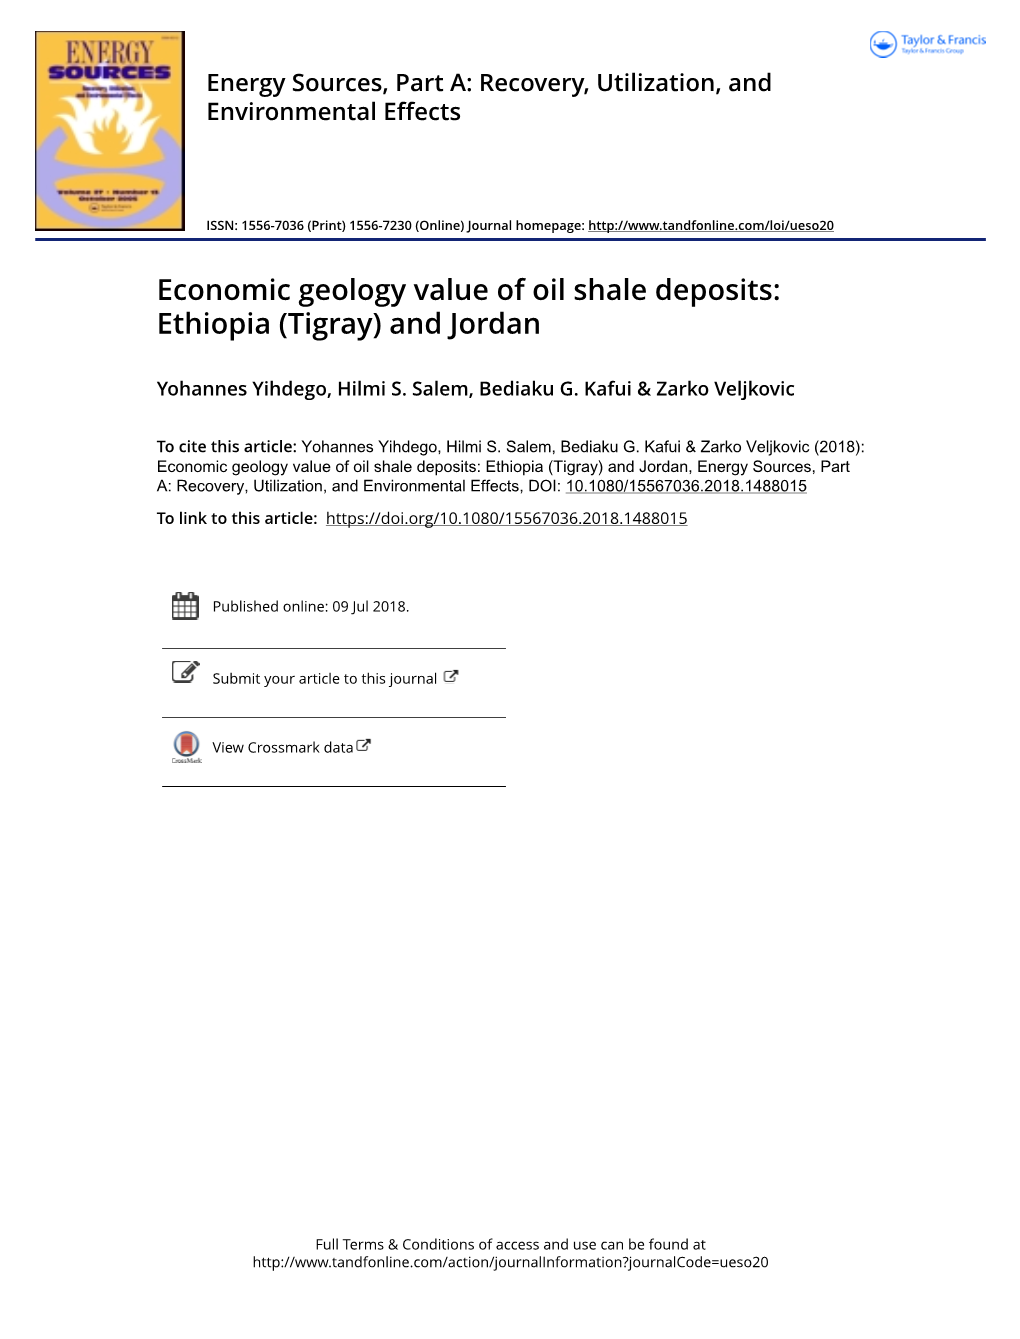 Economic Geology Value of Oil Shale Deposits: Ethiopia (Tigray) and Jordan